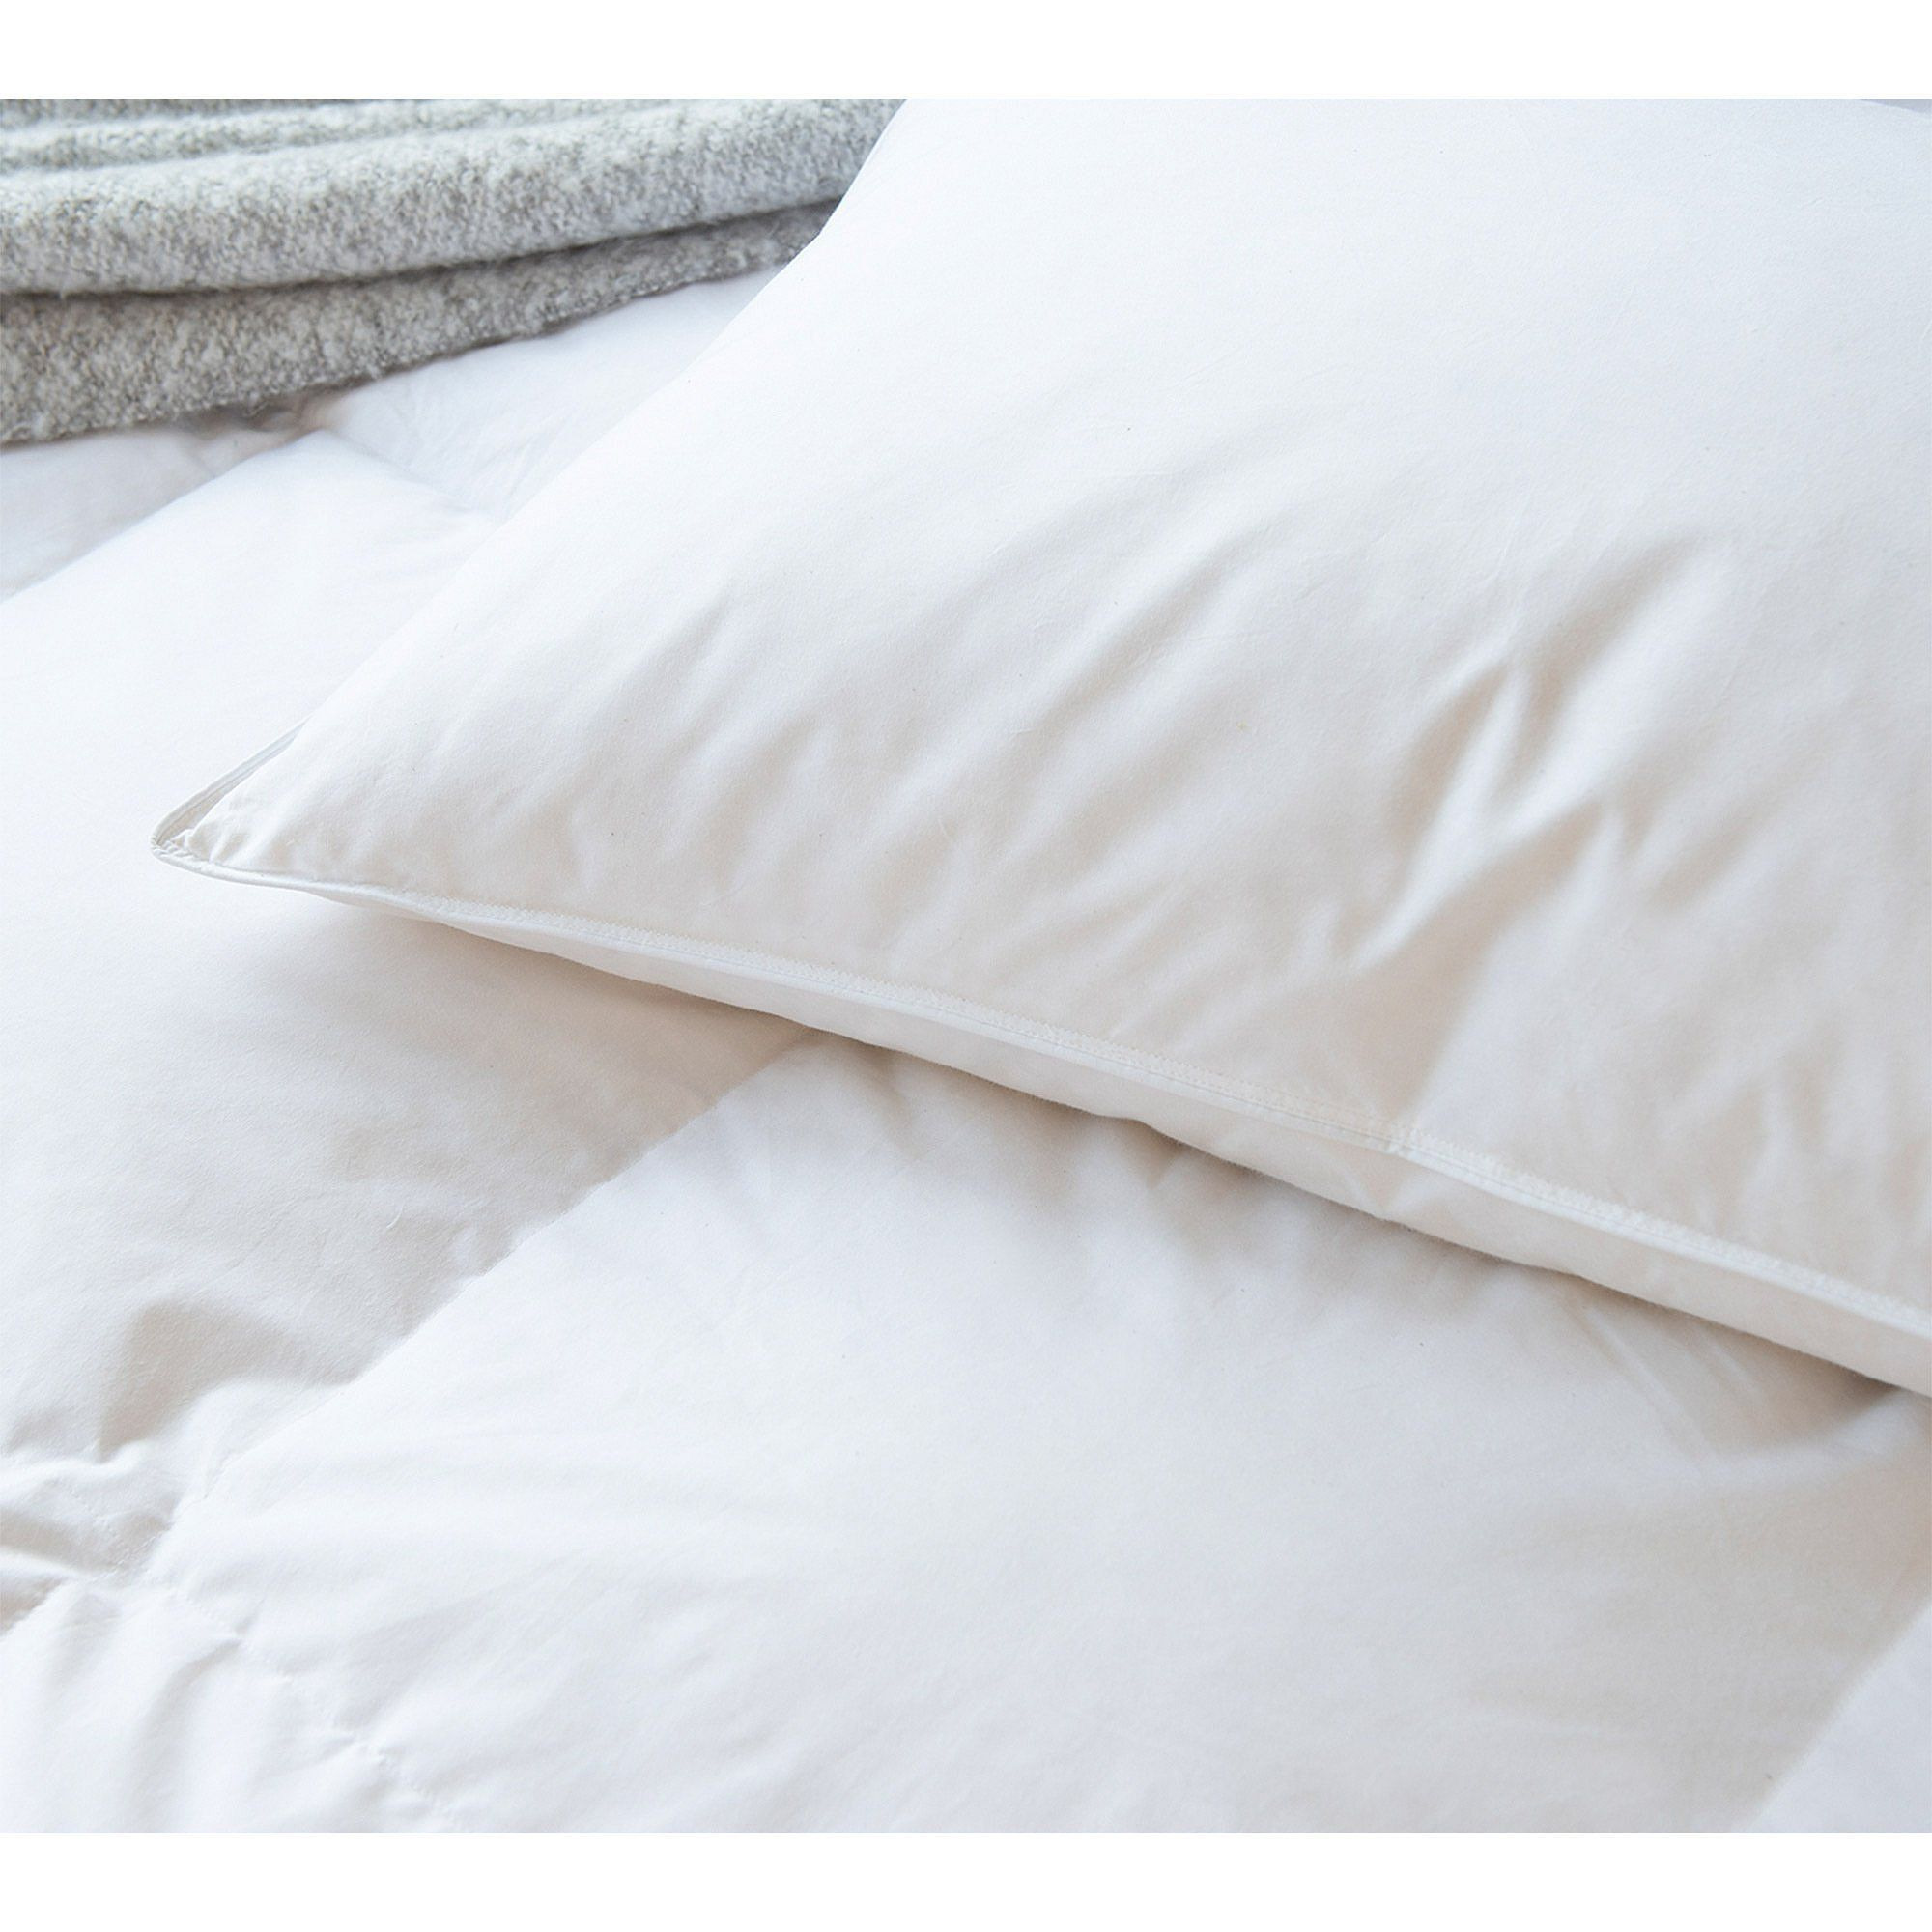 Pair of Anti-Allergy Pillows - image 1